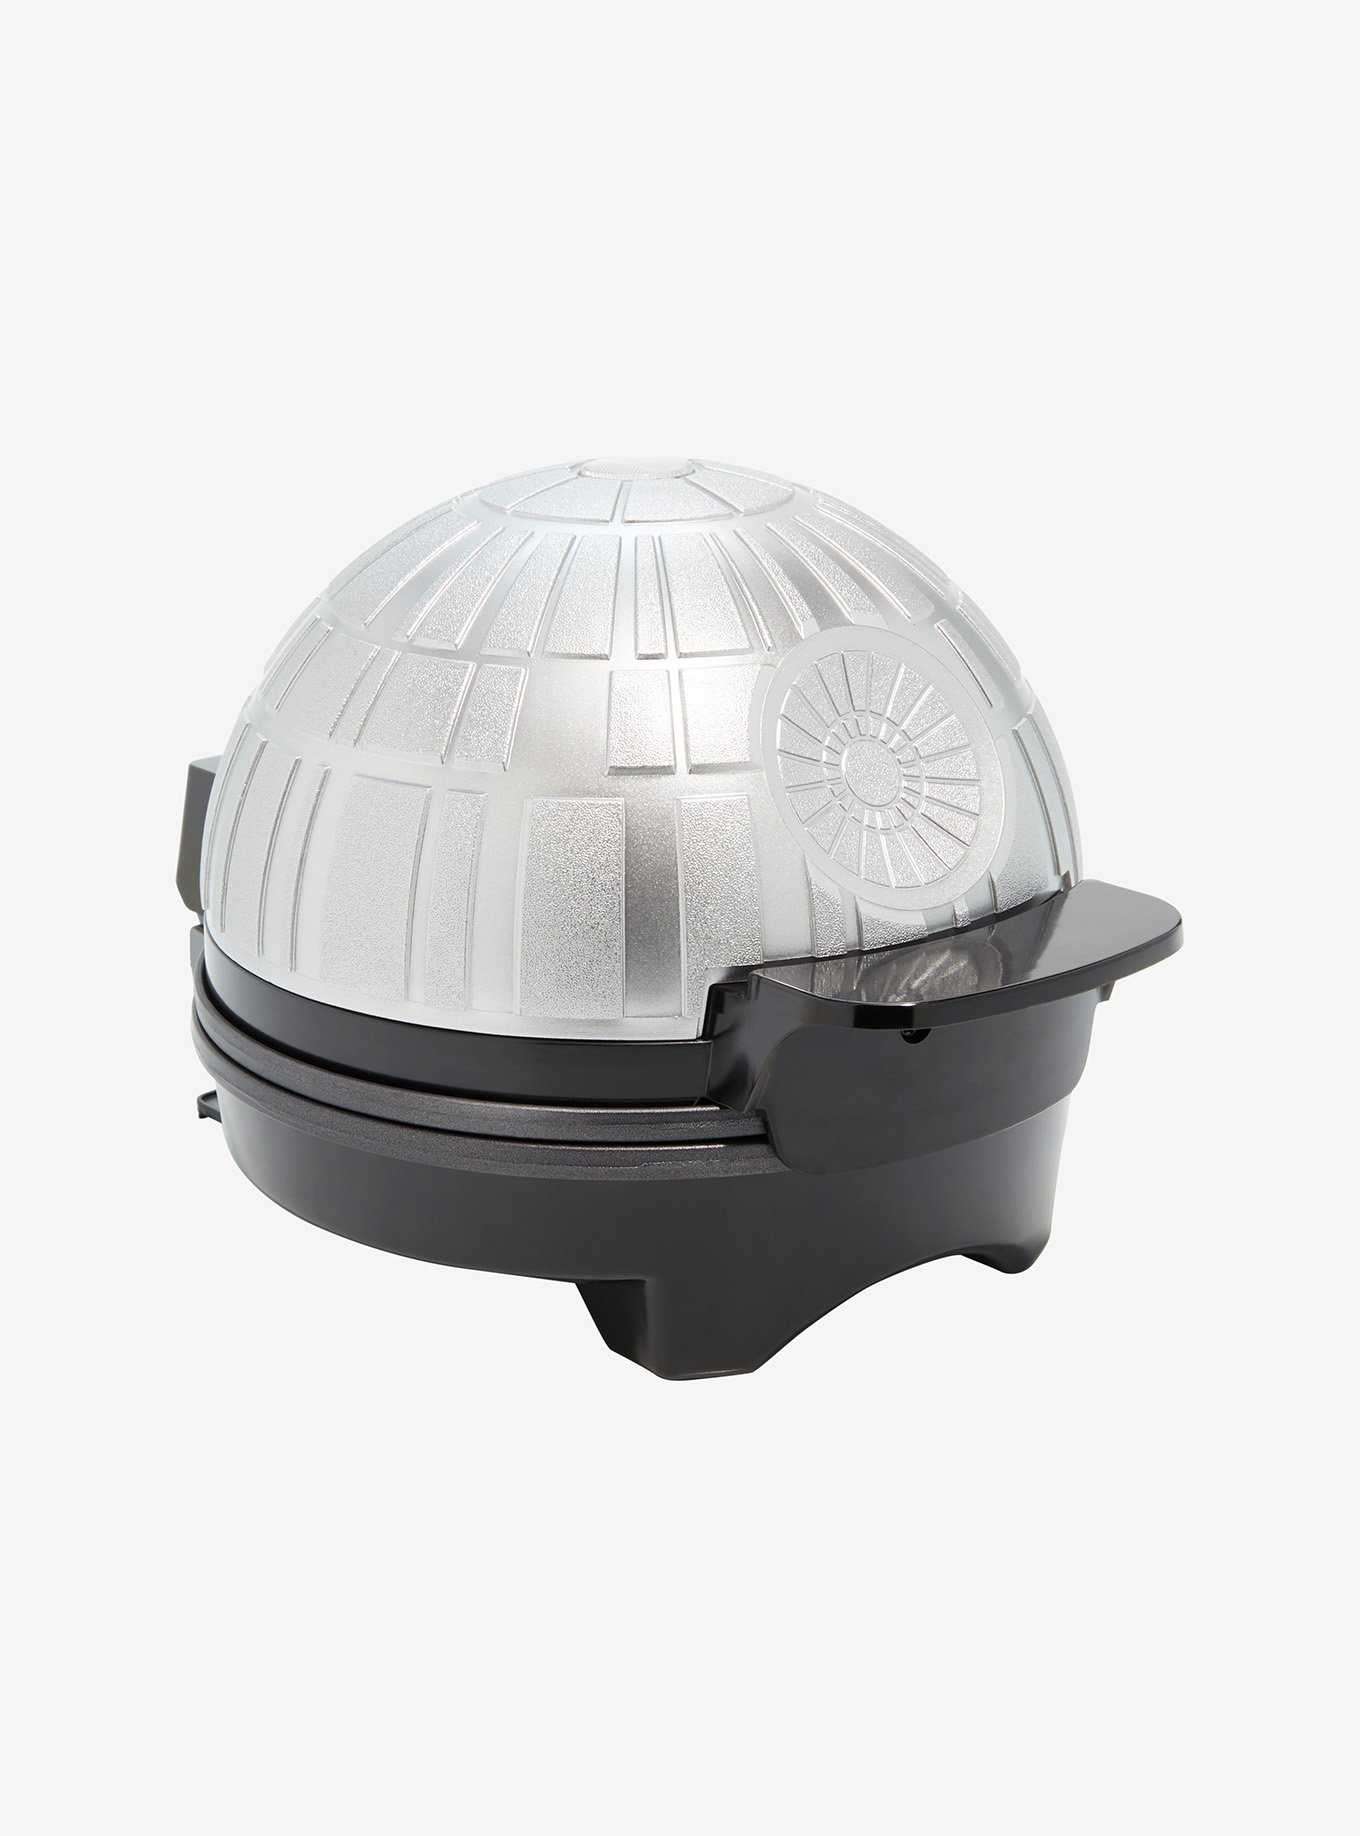 Grille Pain Toaster Star Wars (Disney) - urekaWEB : les inventions